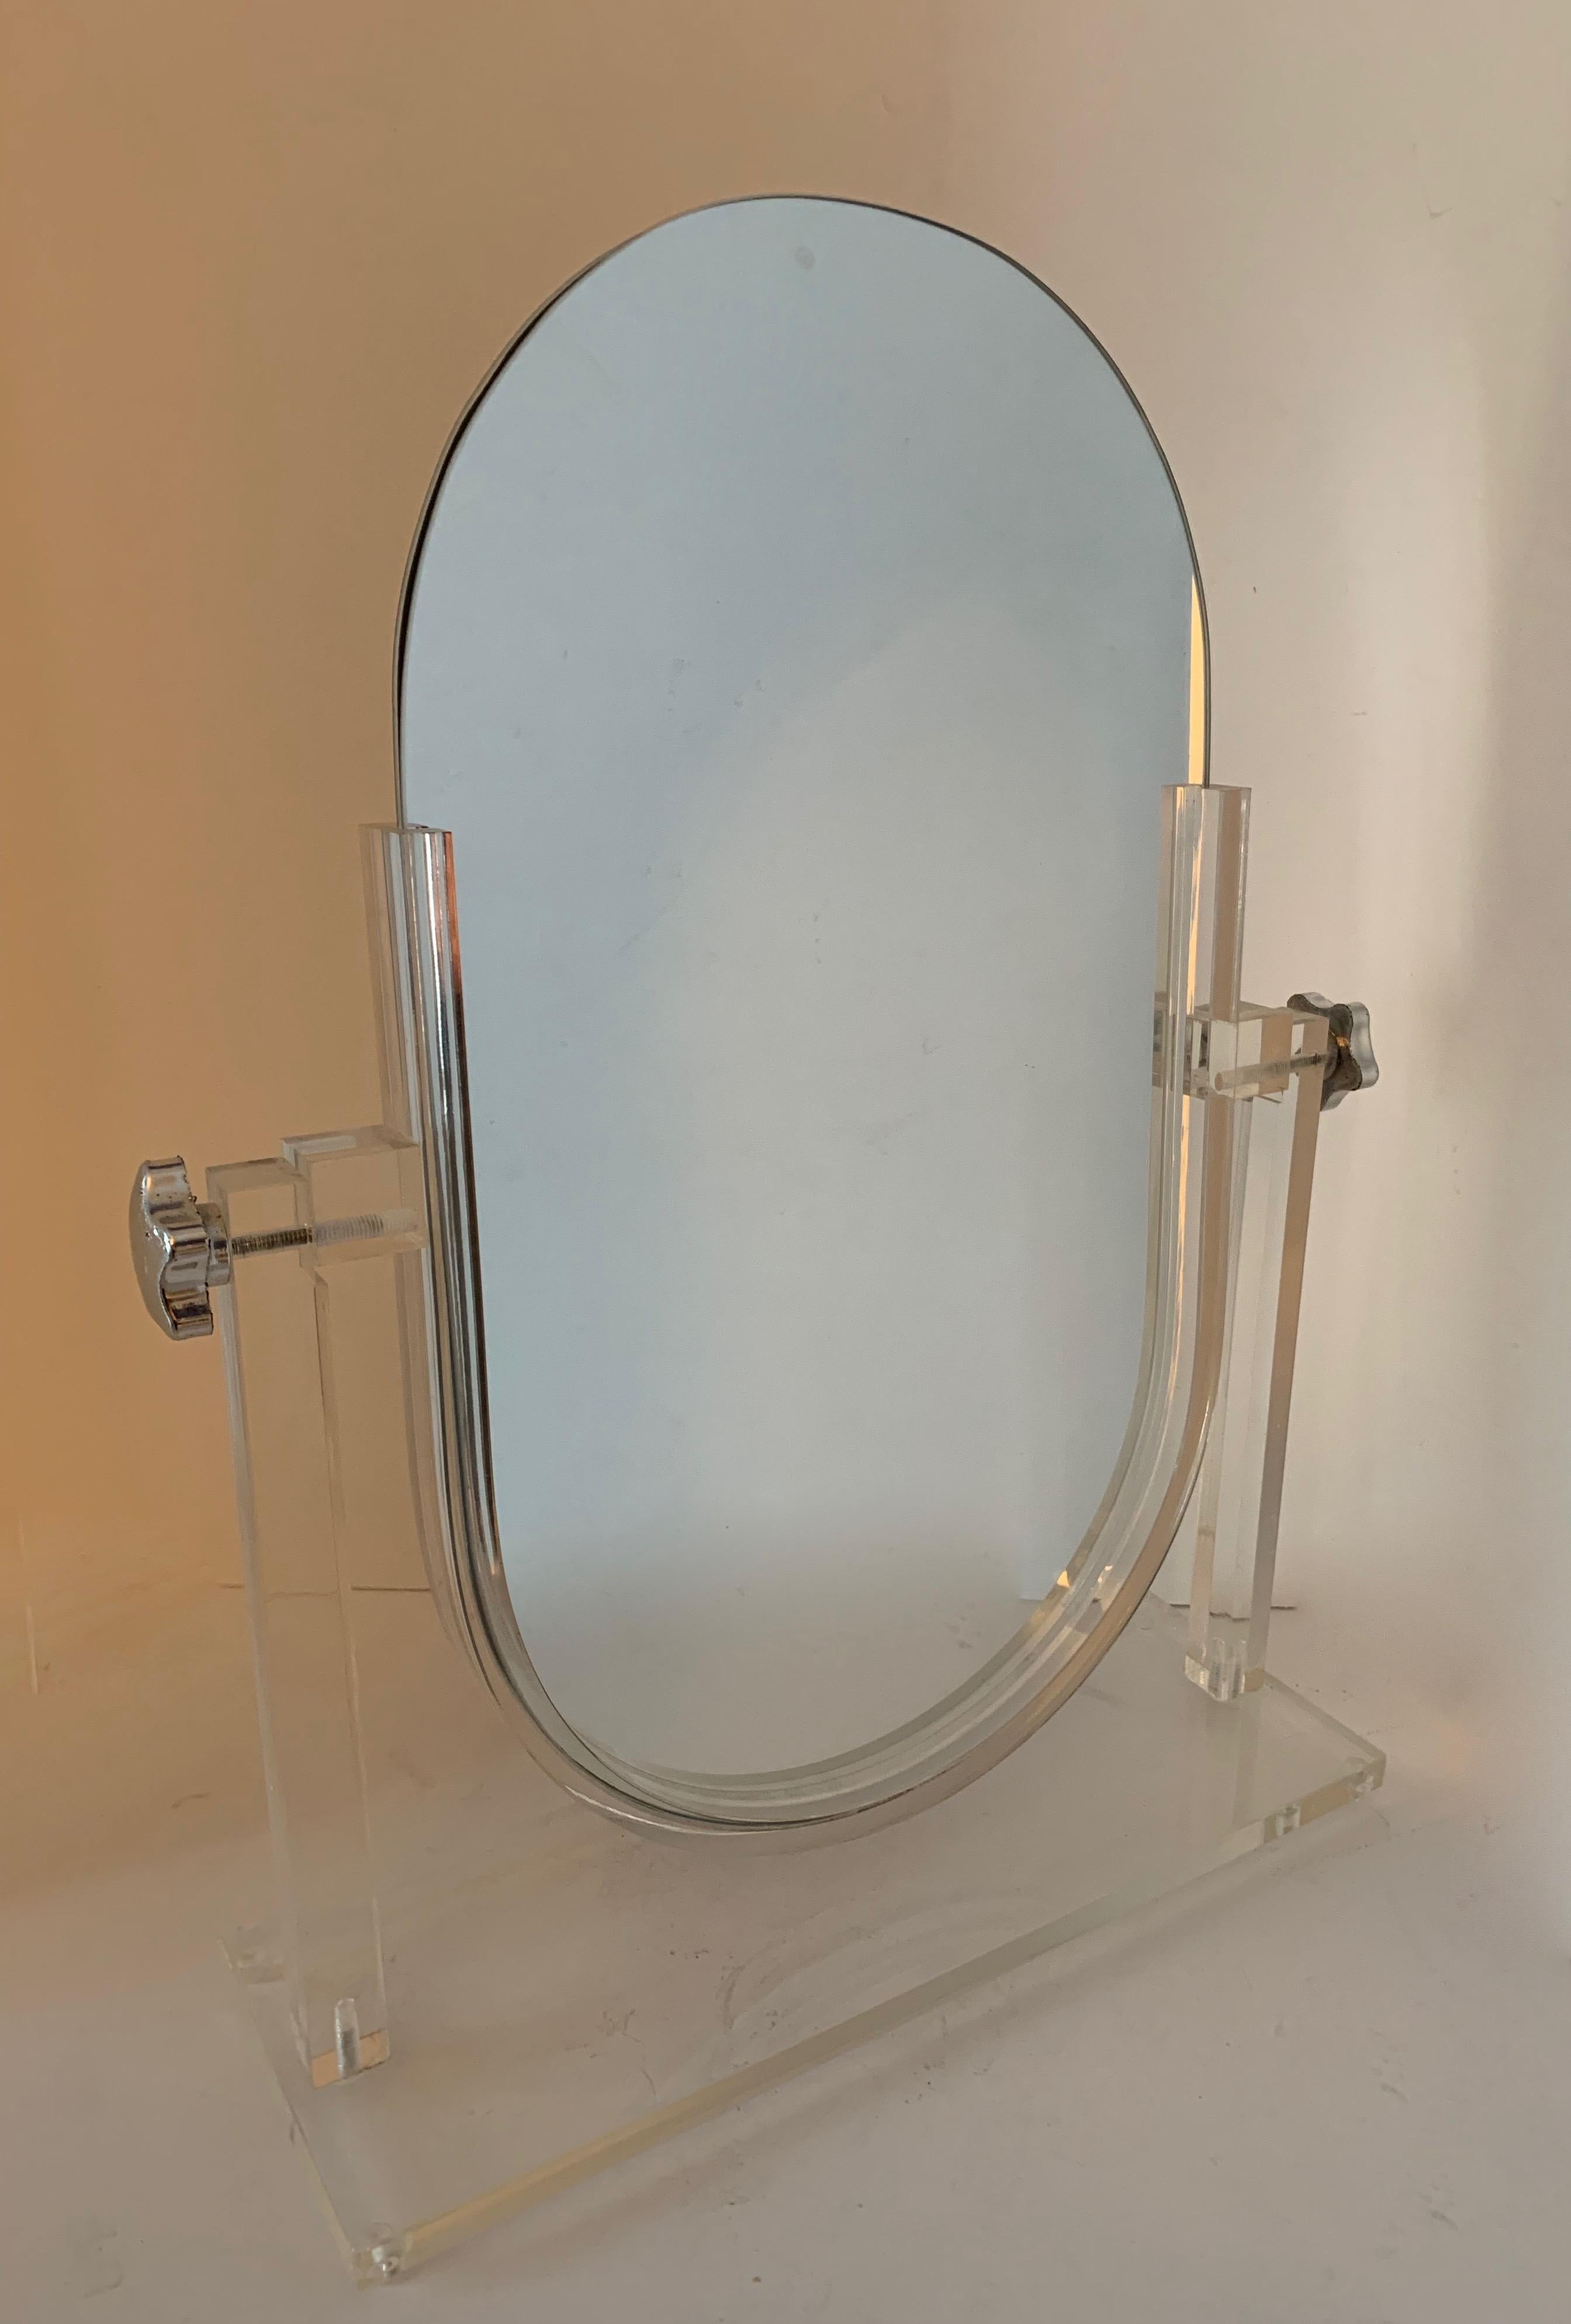 acrylic mirror stand